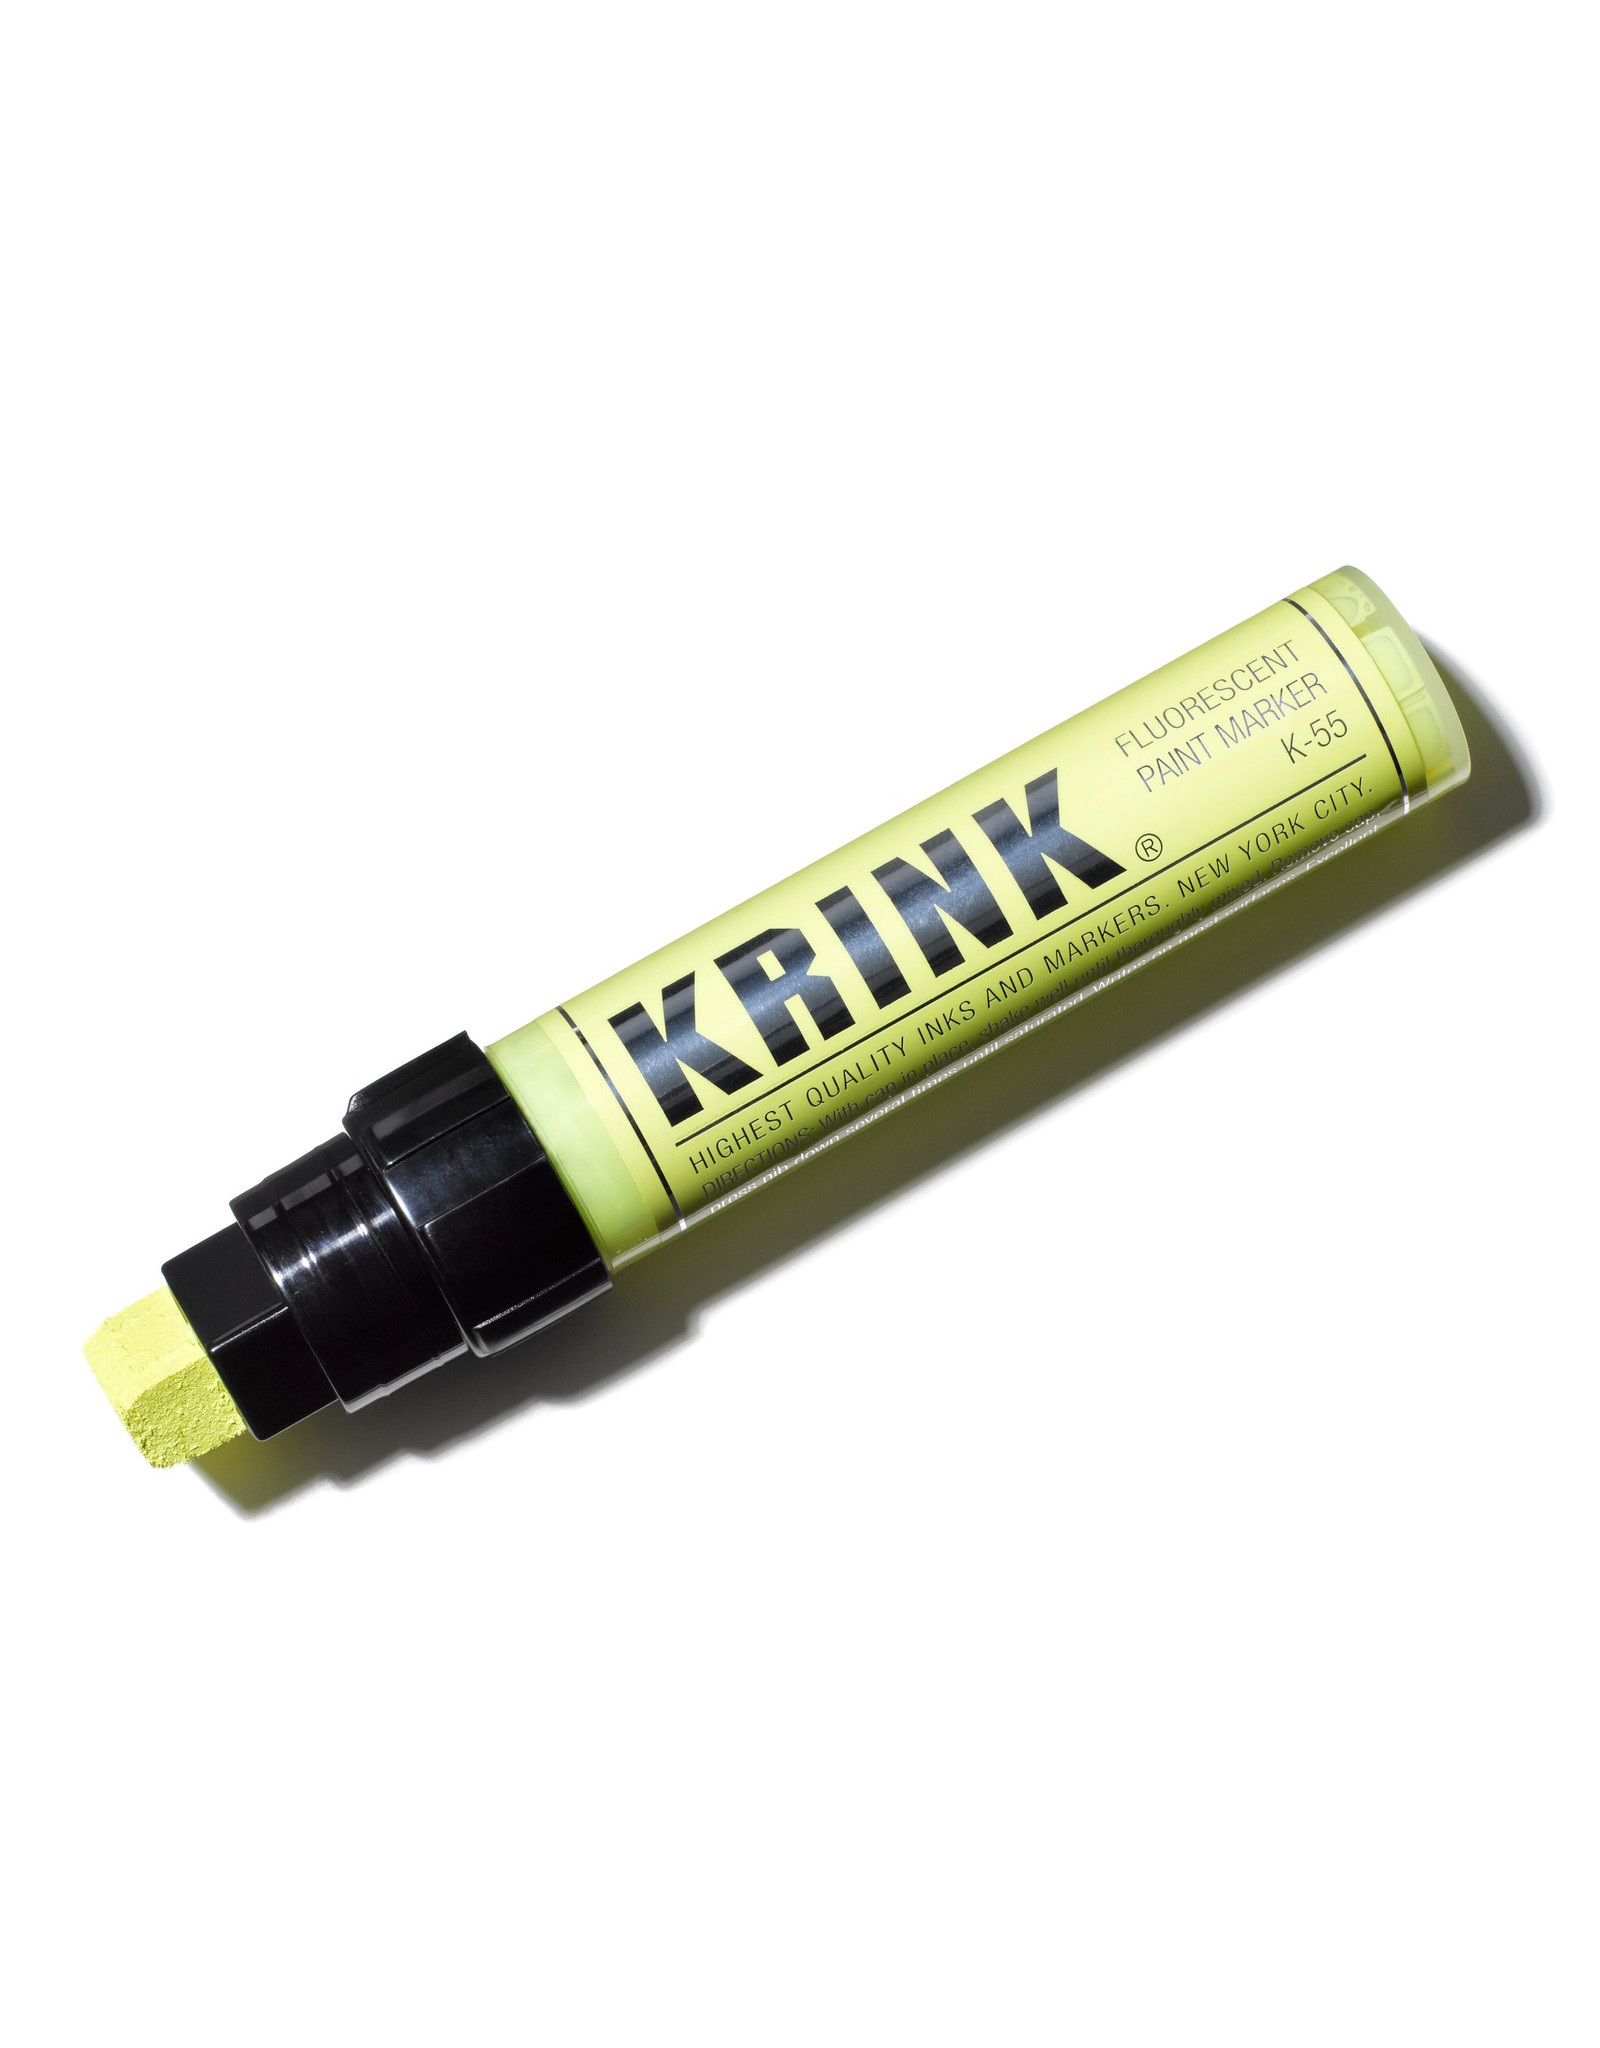 Krink Krink K-55 Acrylic Paint Marker, Yellow